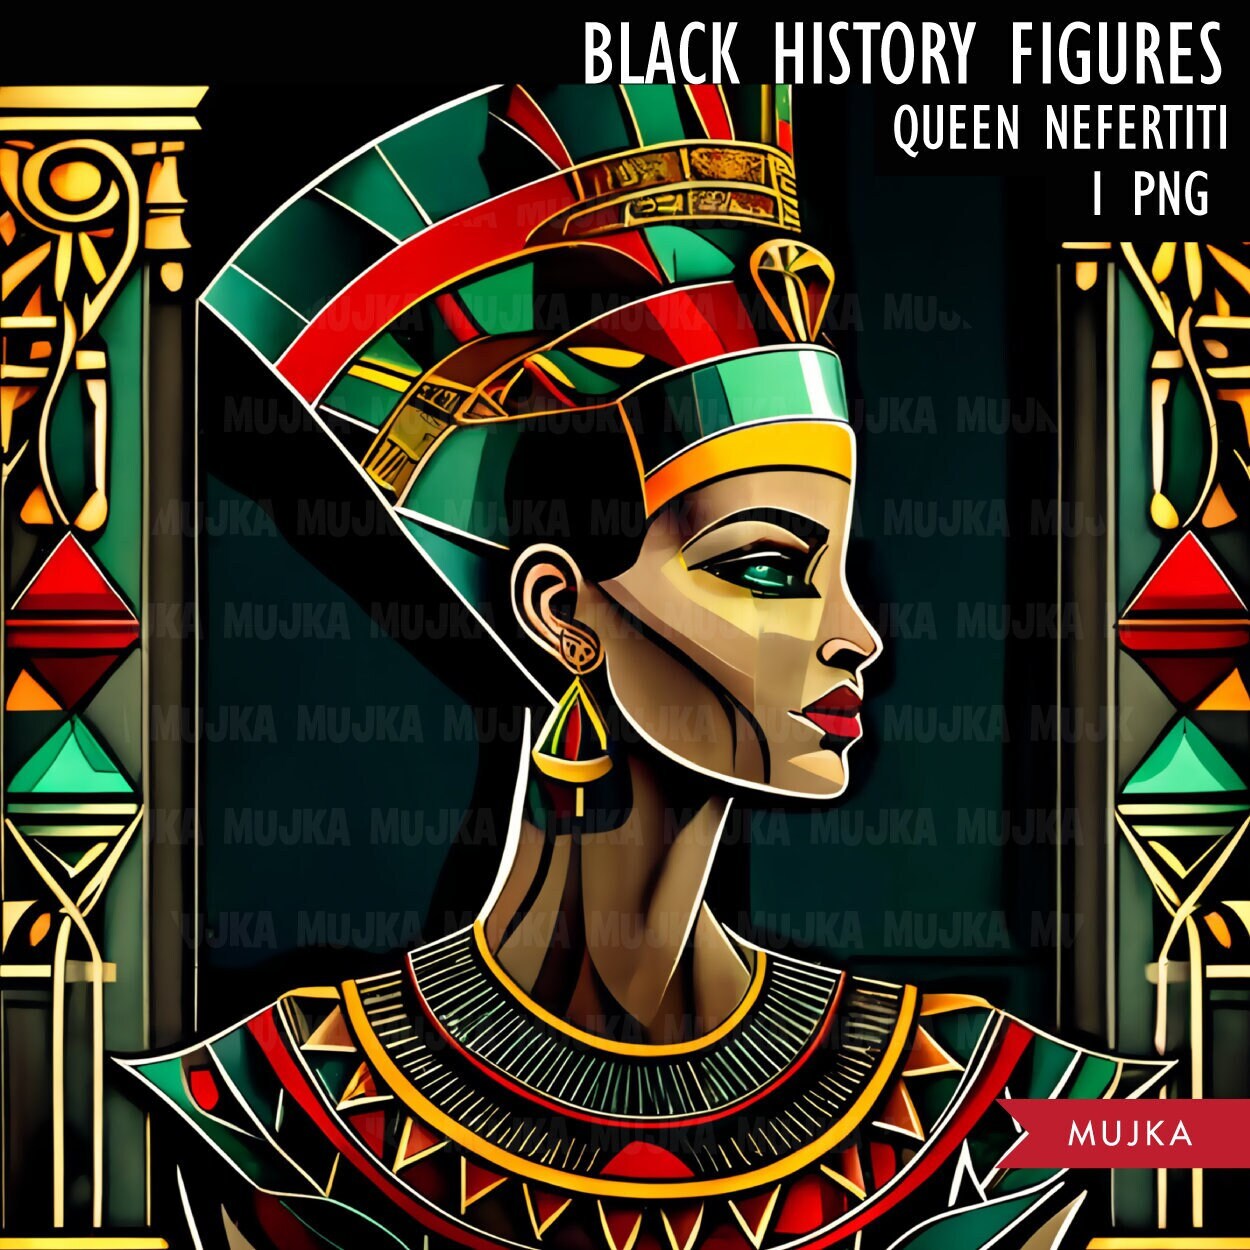 Black History PNG, Queen Nefertiti poster, Black History Cards, printable Black History Art, Black History wall art, sublimation design